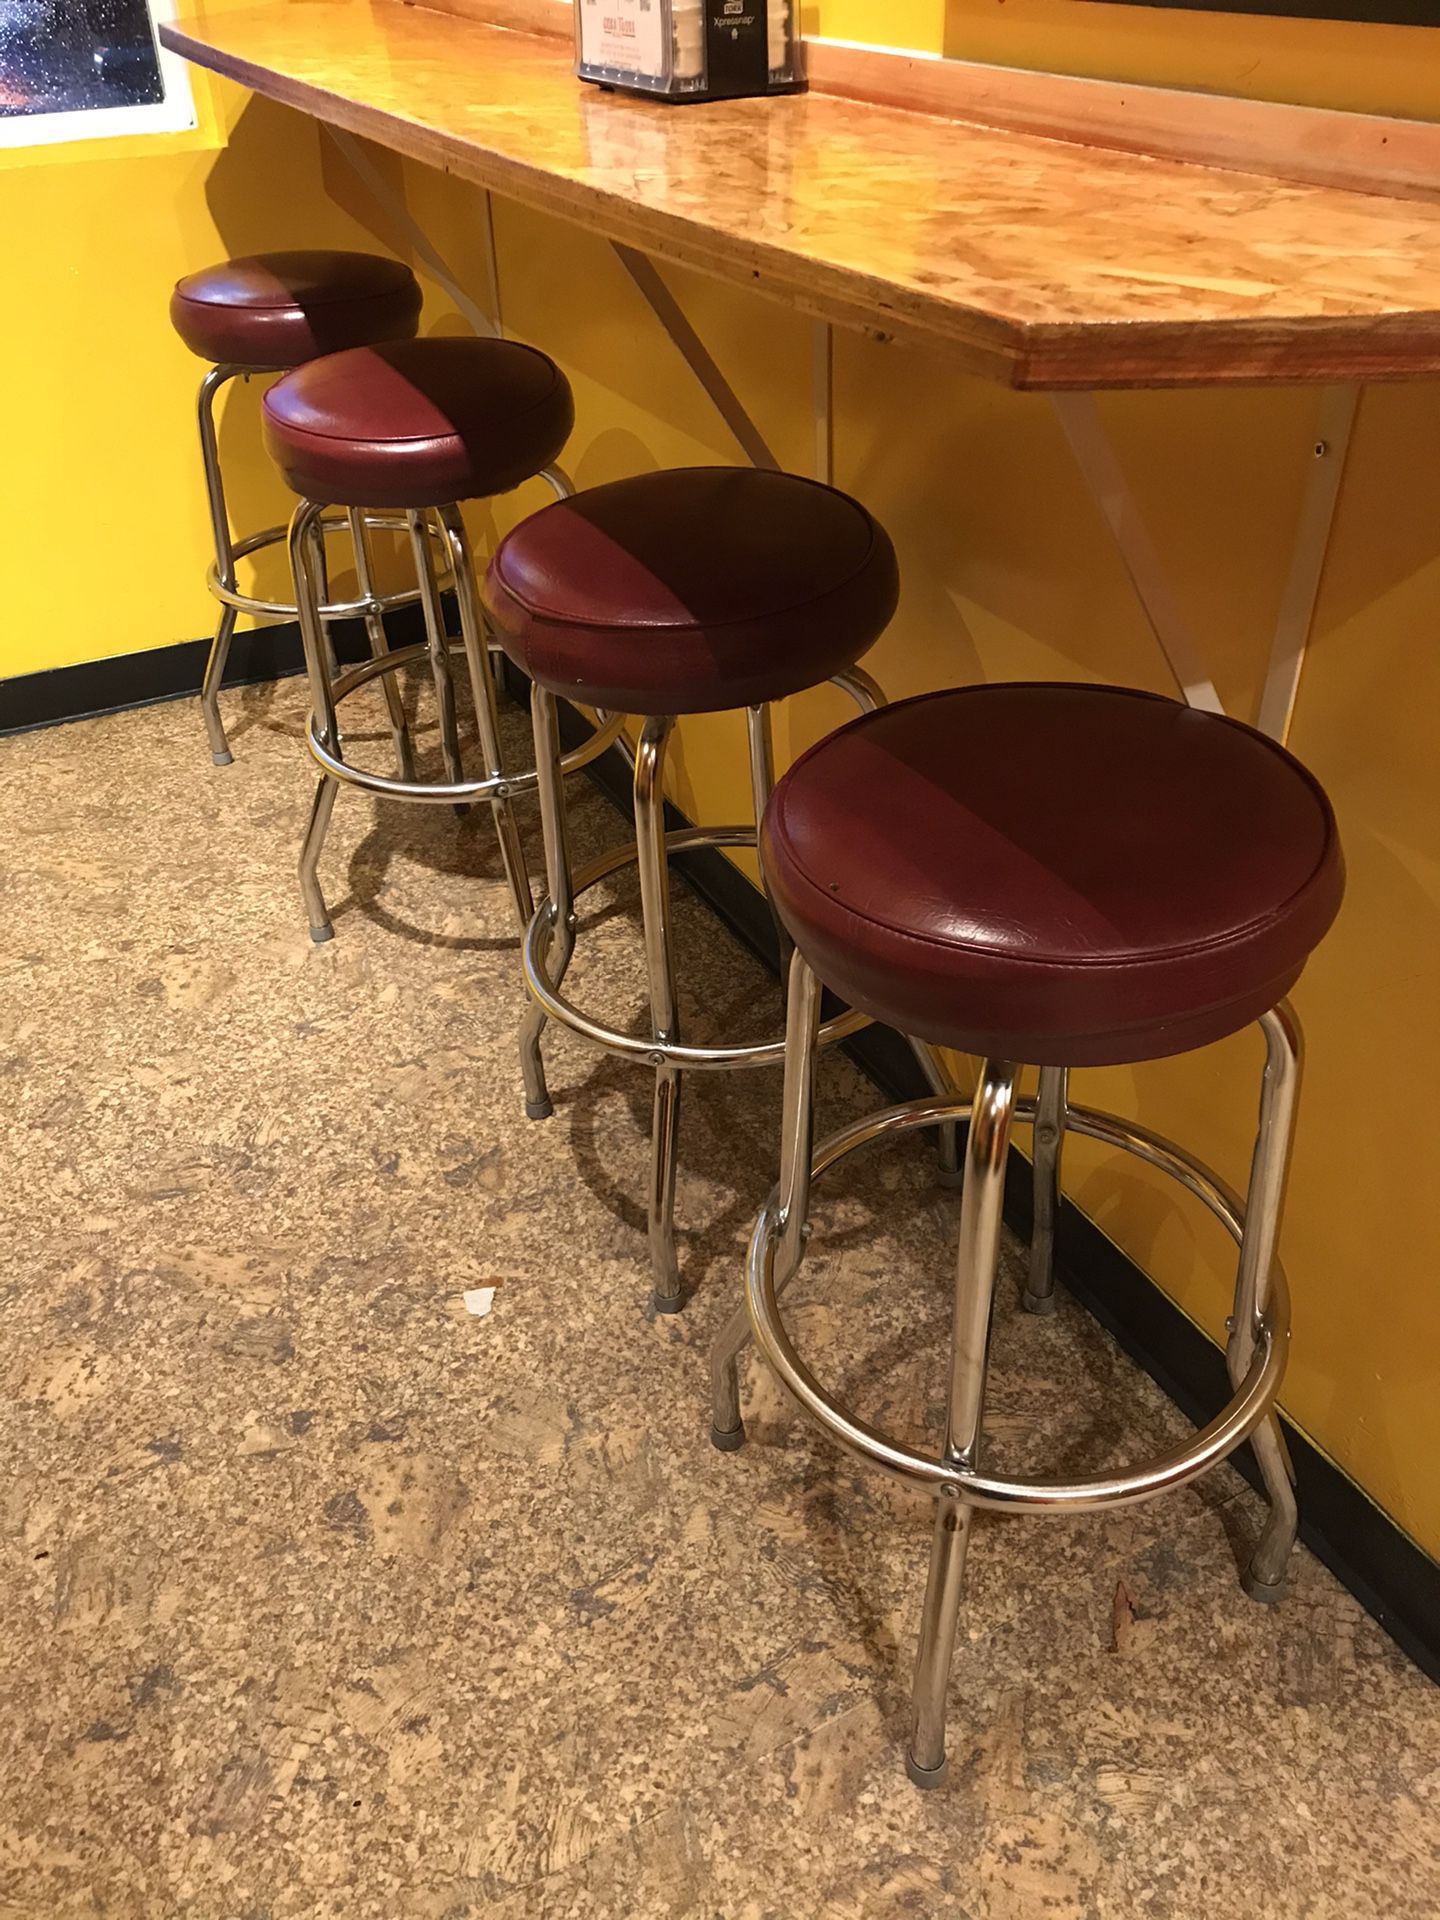 50’s style restaurant bar stools - 12